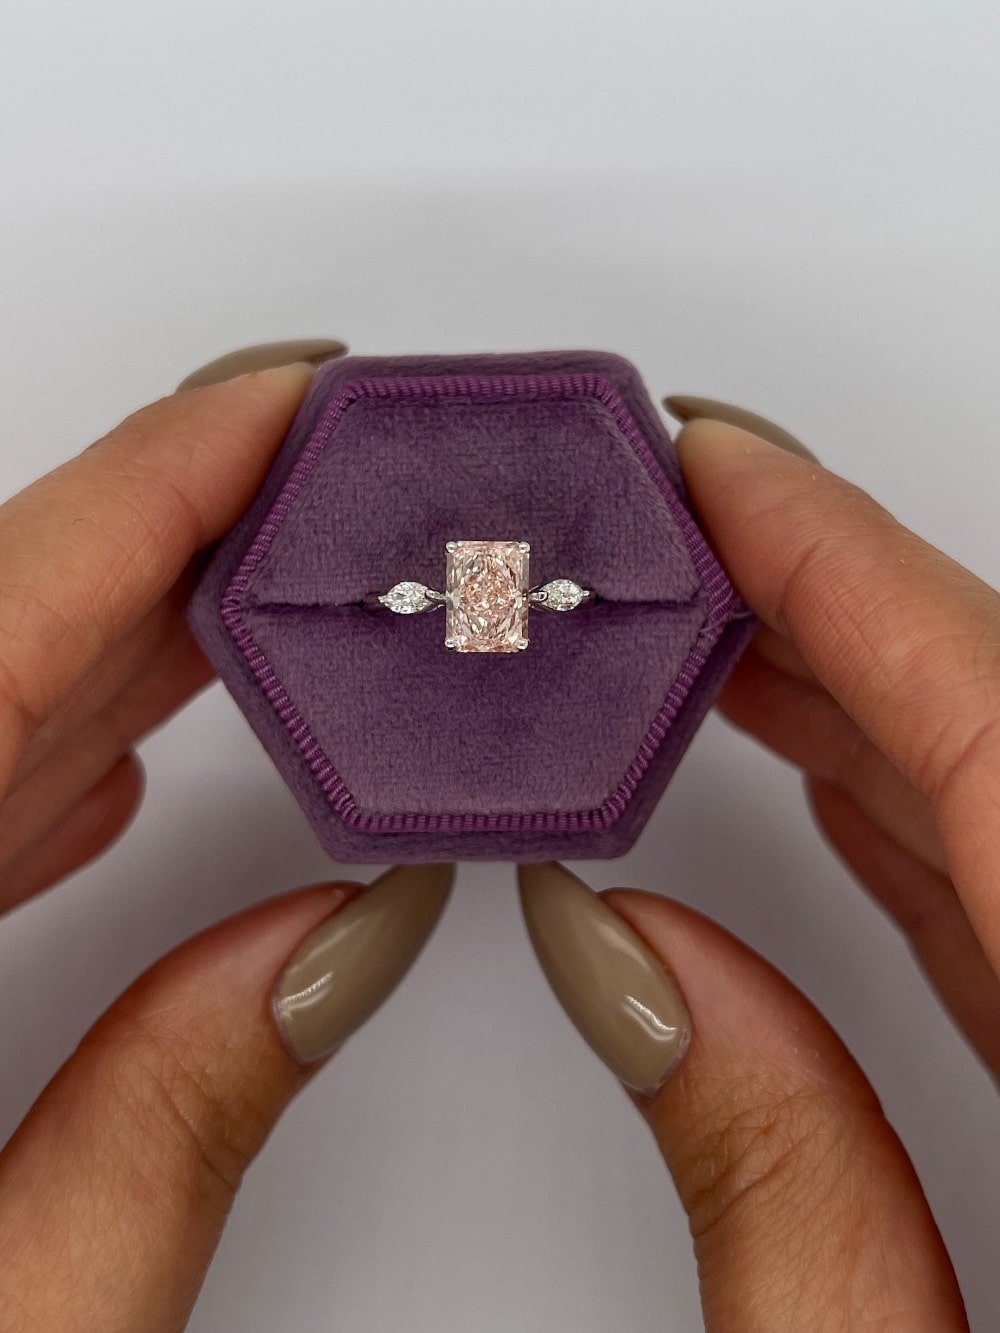 Fancy Pink Diamond Engagement Ring by KosherDiamond